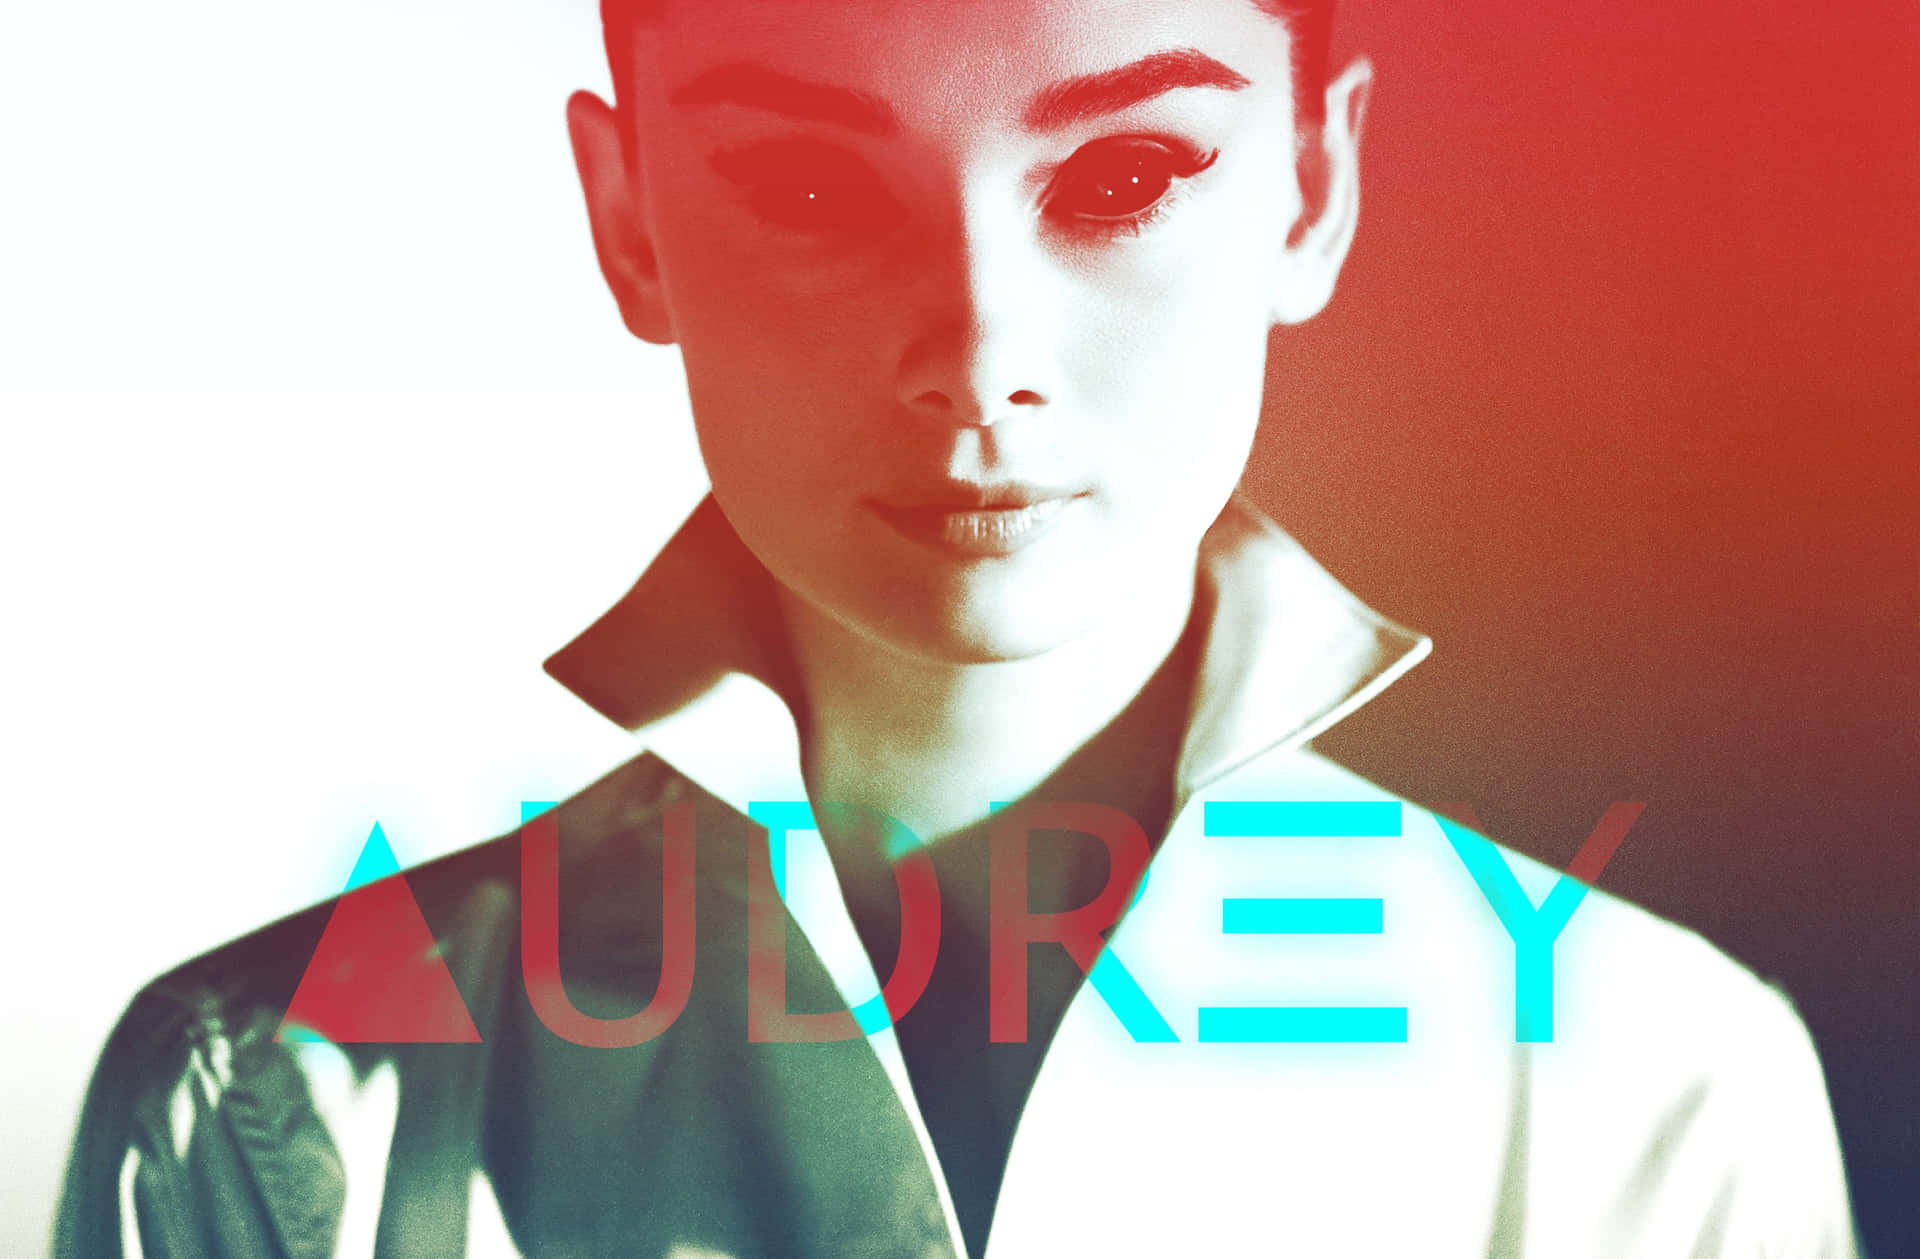 "Elegant and Life-Loving - Audrey Hepburn"